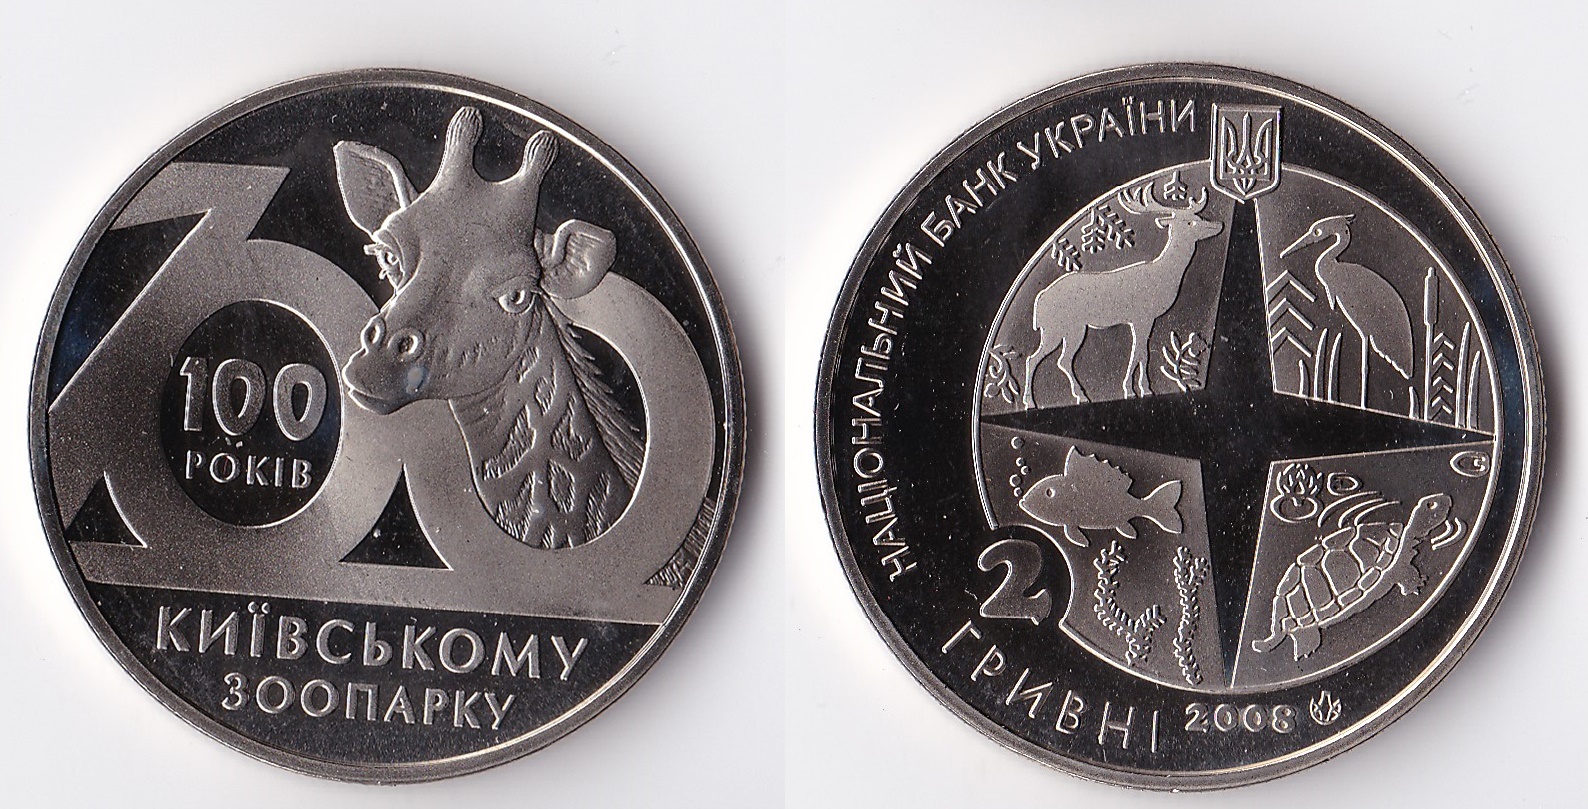 2008 ukraine 2 hryvni.jpg